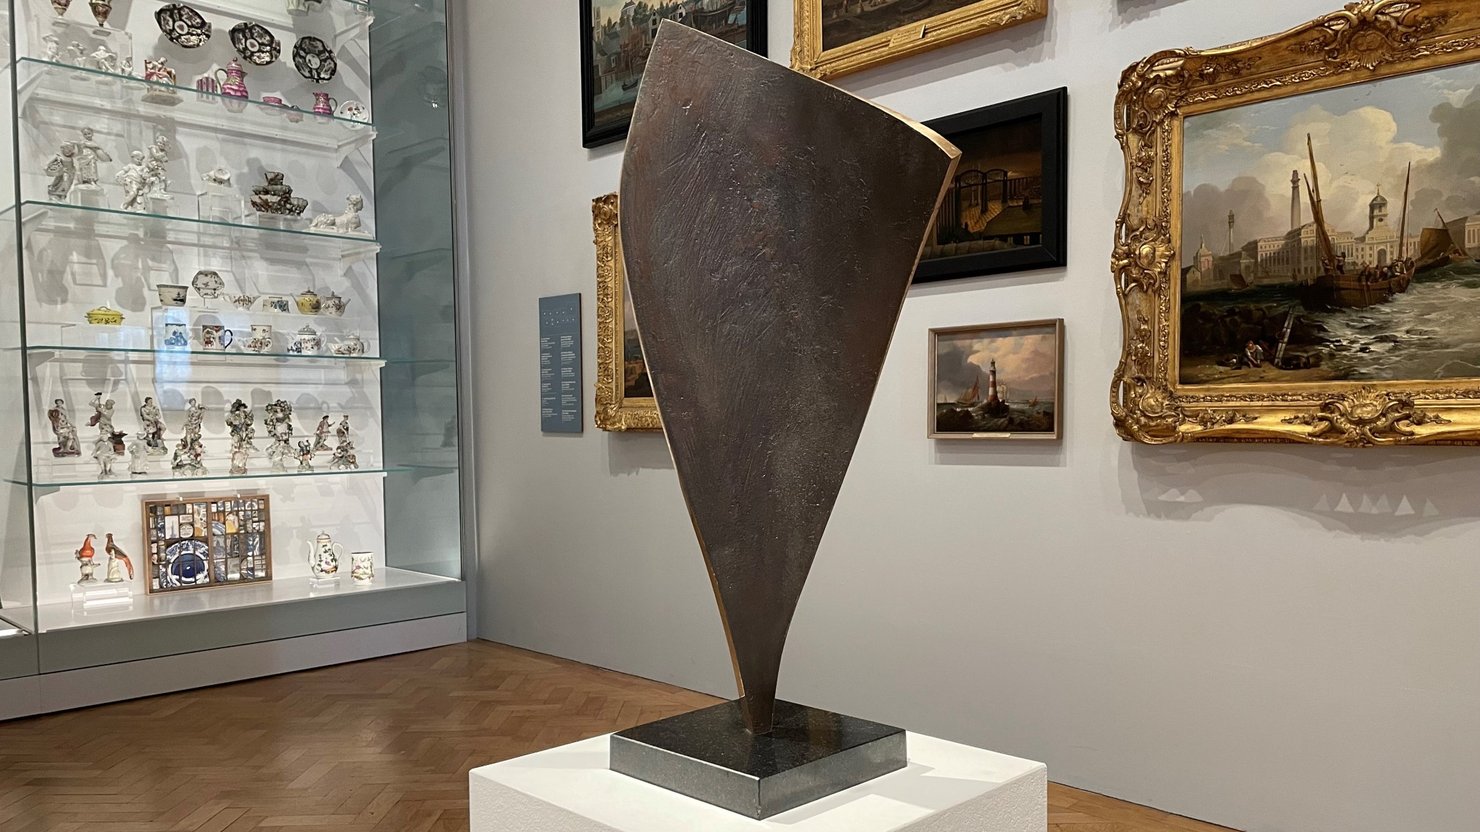 Photograph of a bronze sculpture in a sail shape in an art gallery.